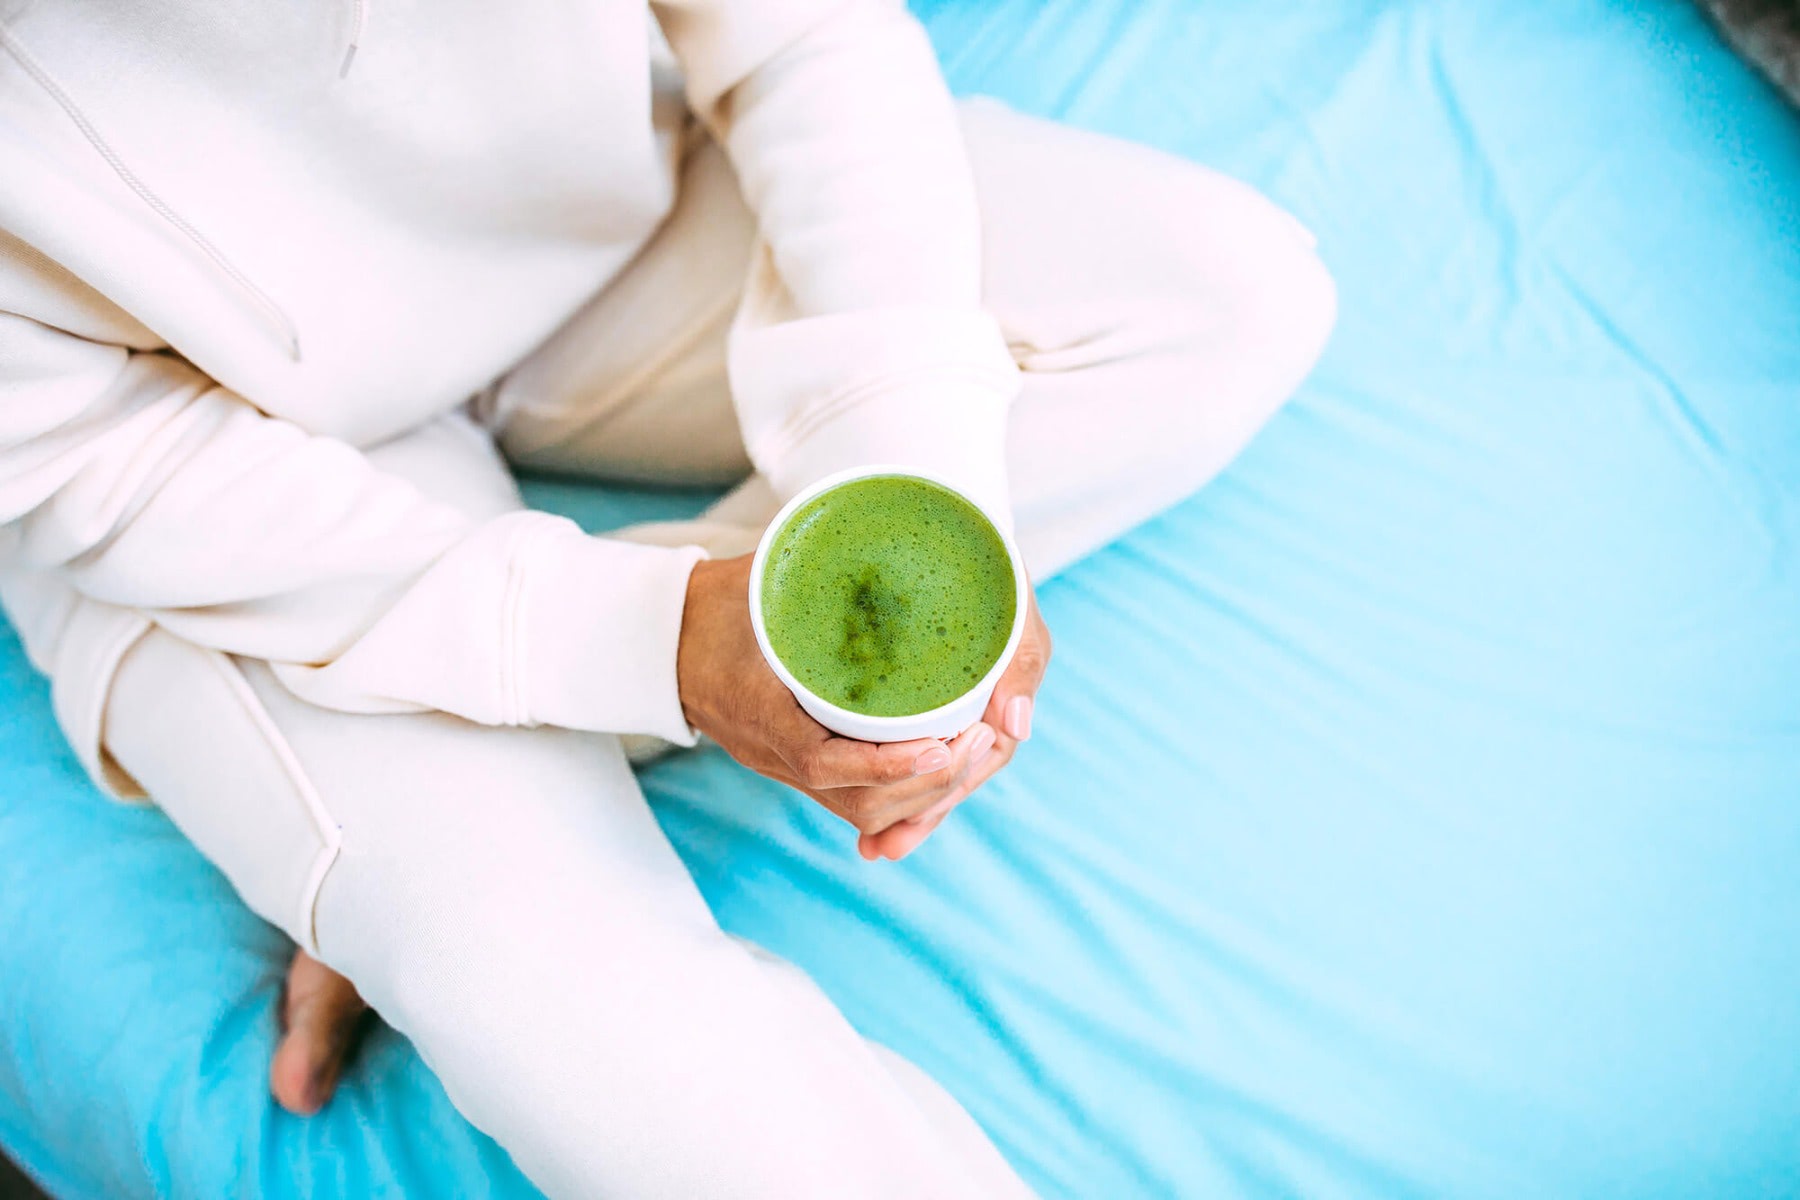 Woman sitting on blue bed holding matcha latte